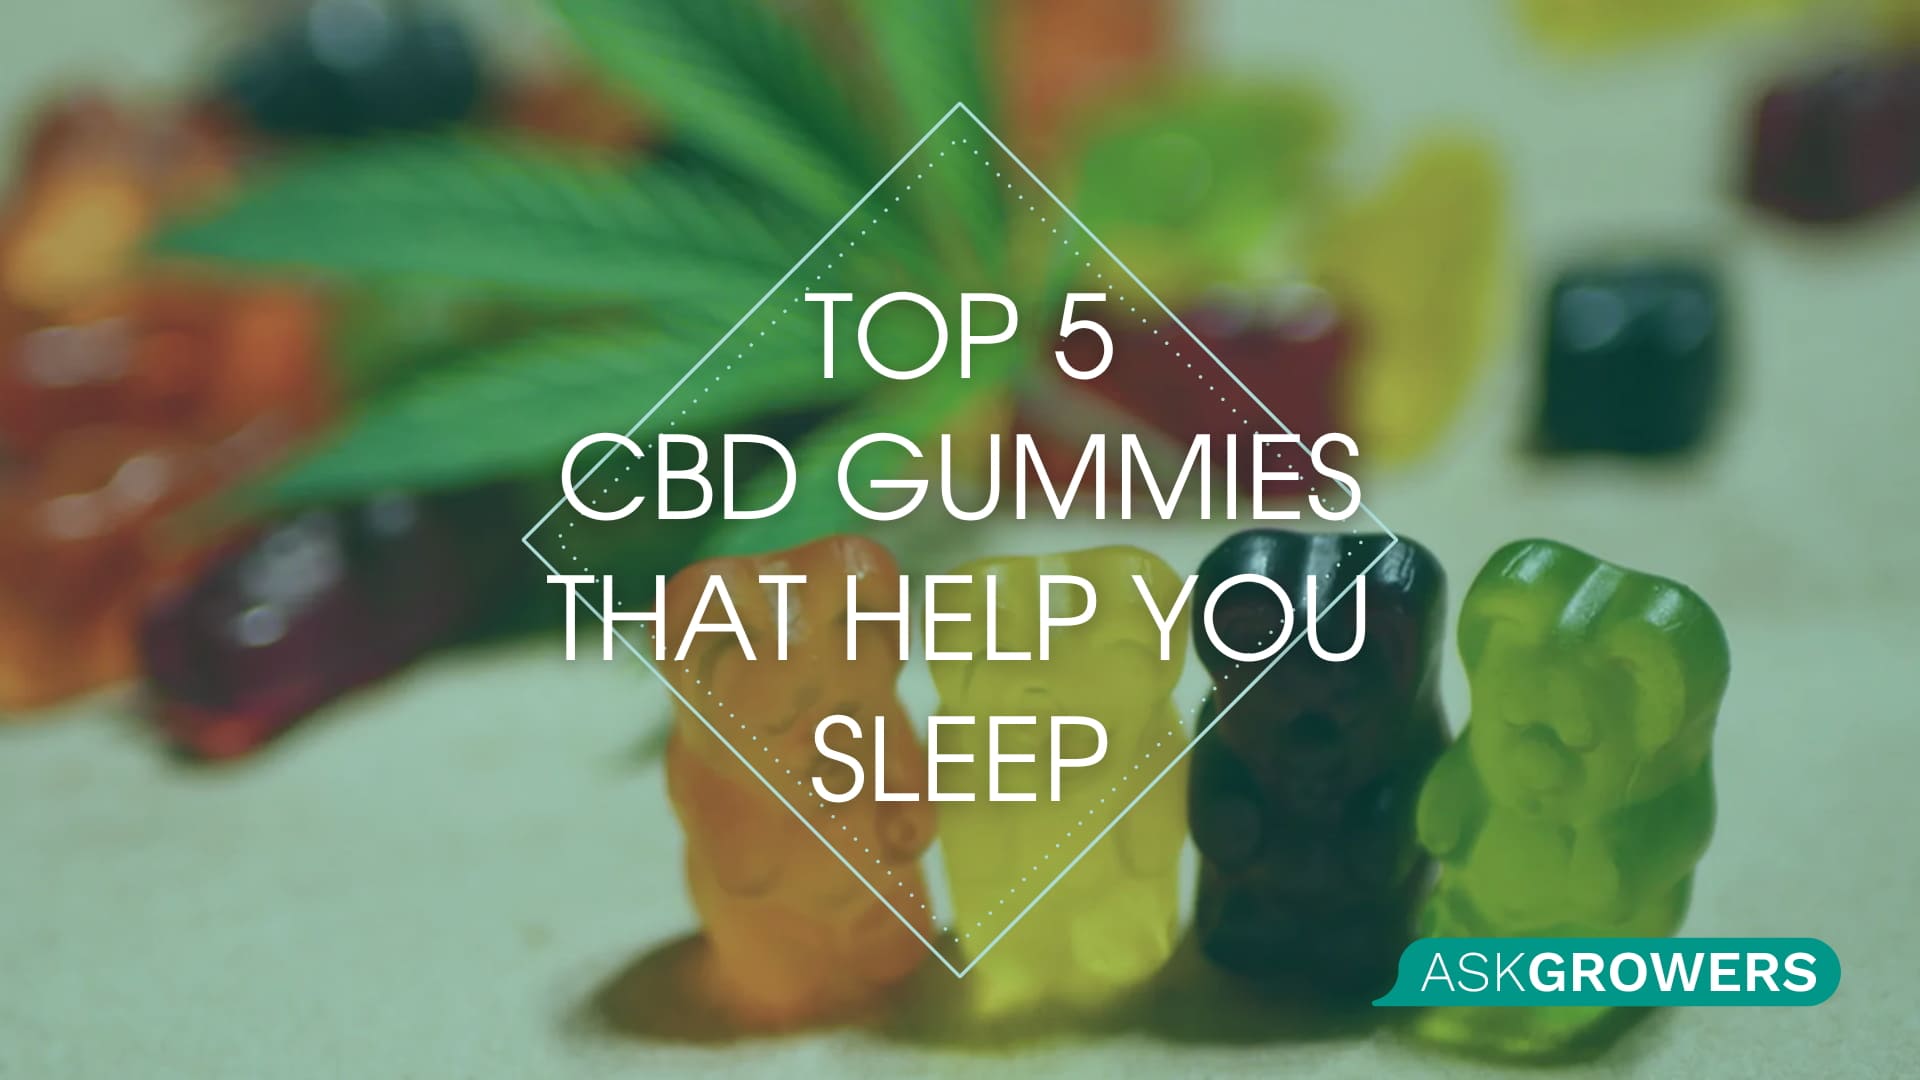 Finding Sleep with CBD: Best CBD Gummies to Help You Sleep